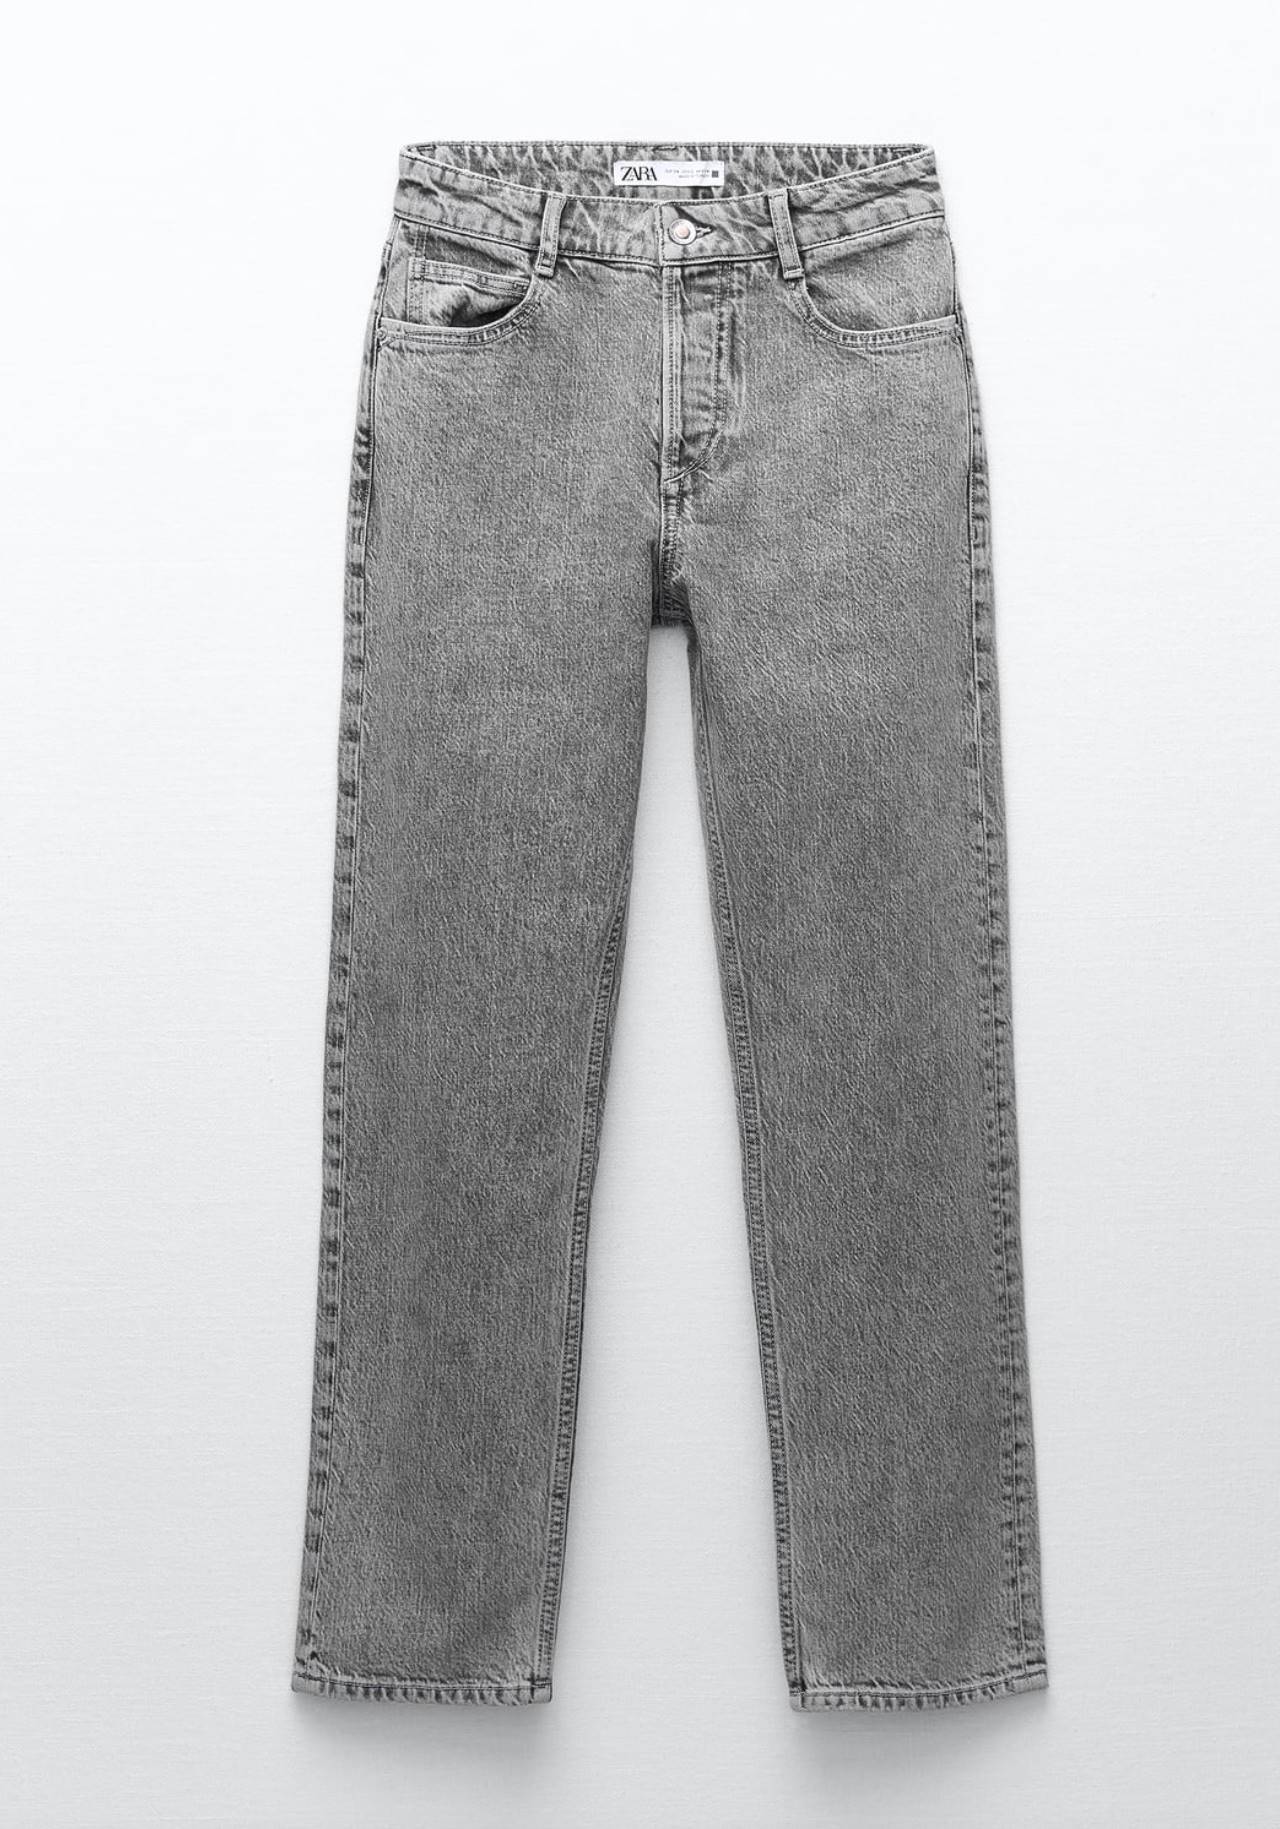 jeans grises Zara